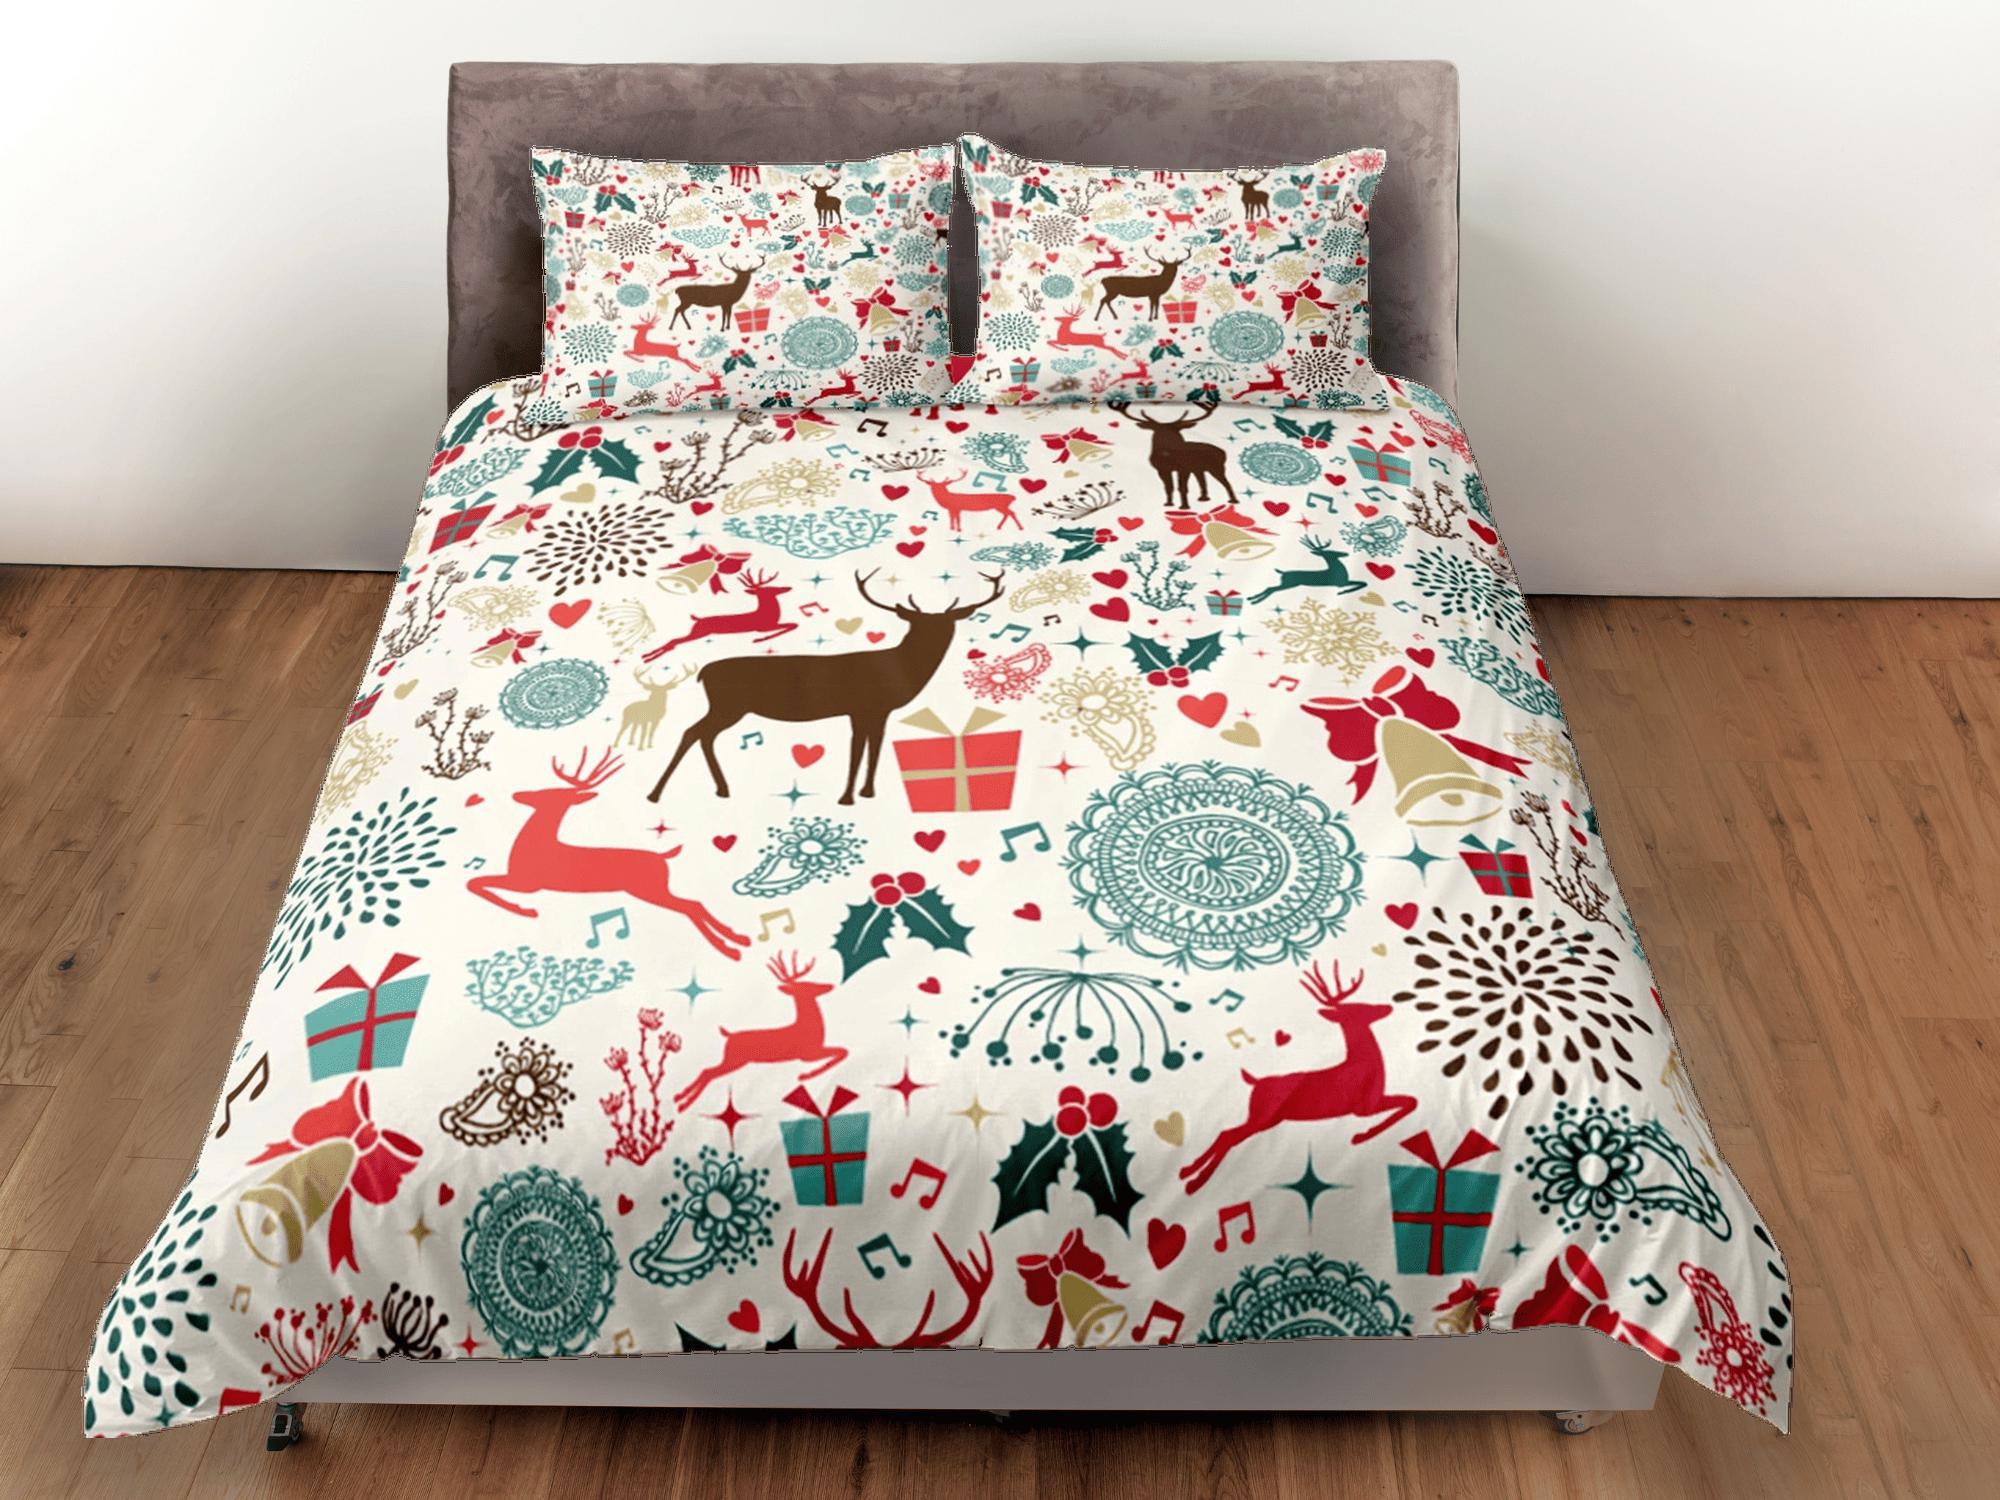 daintyduvet Christmas Duvet Cover Set with Pillows Christmas Reindeer Dorm Bedding Comforter Cover Christmas Gift